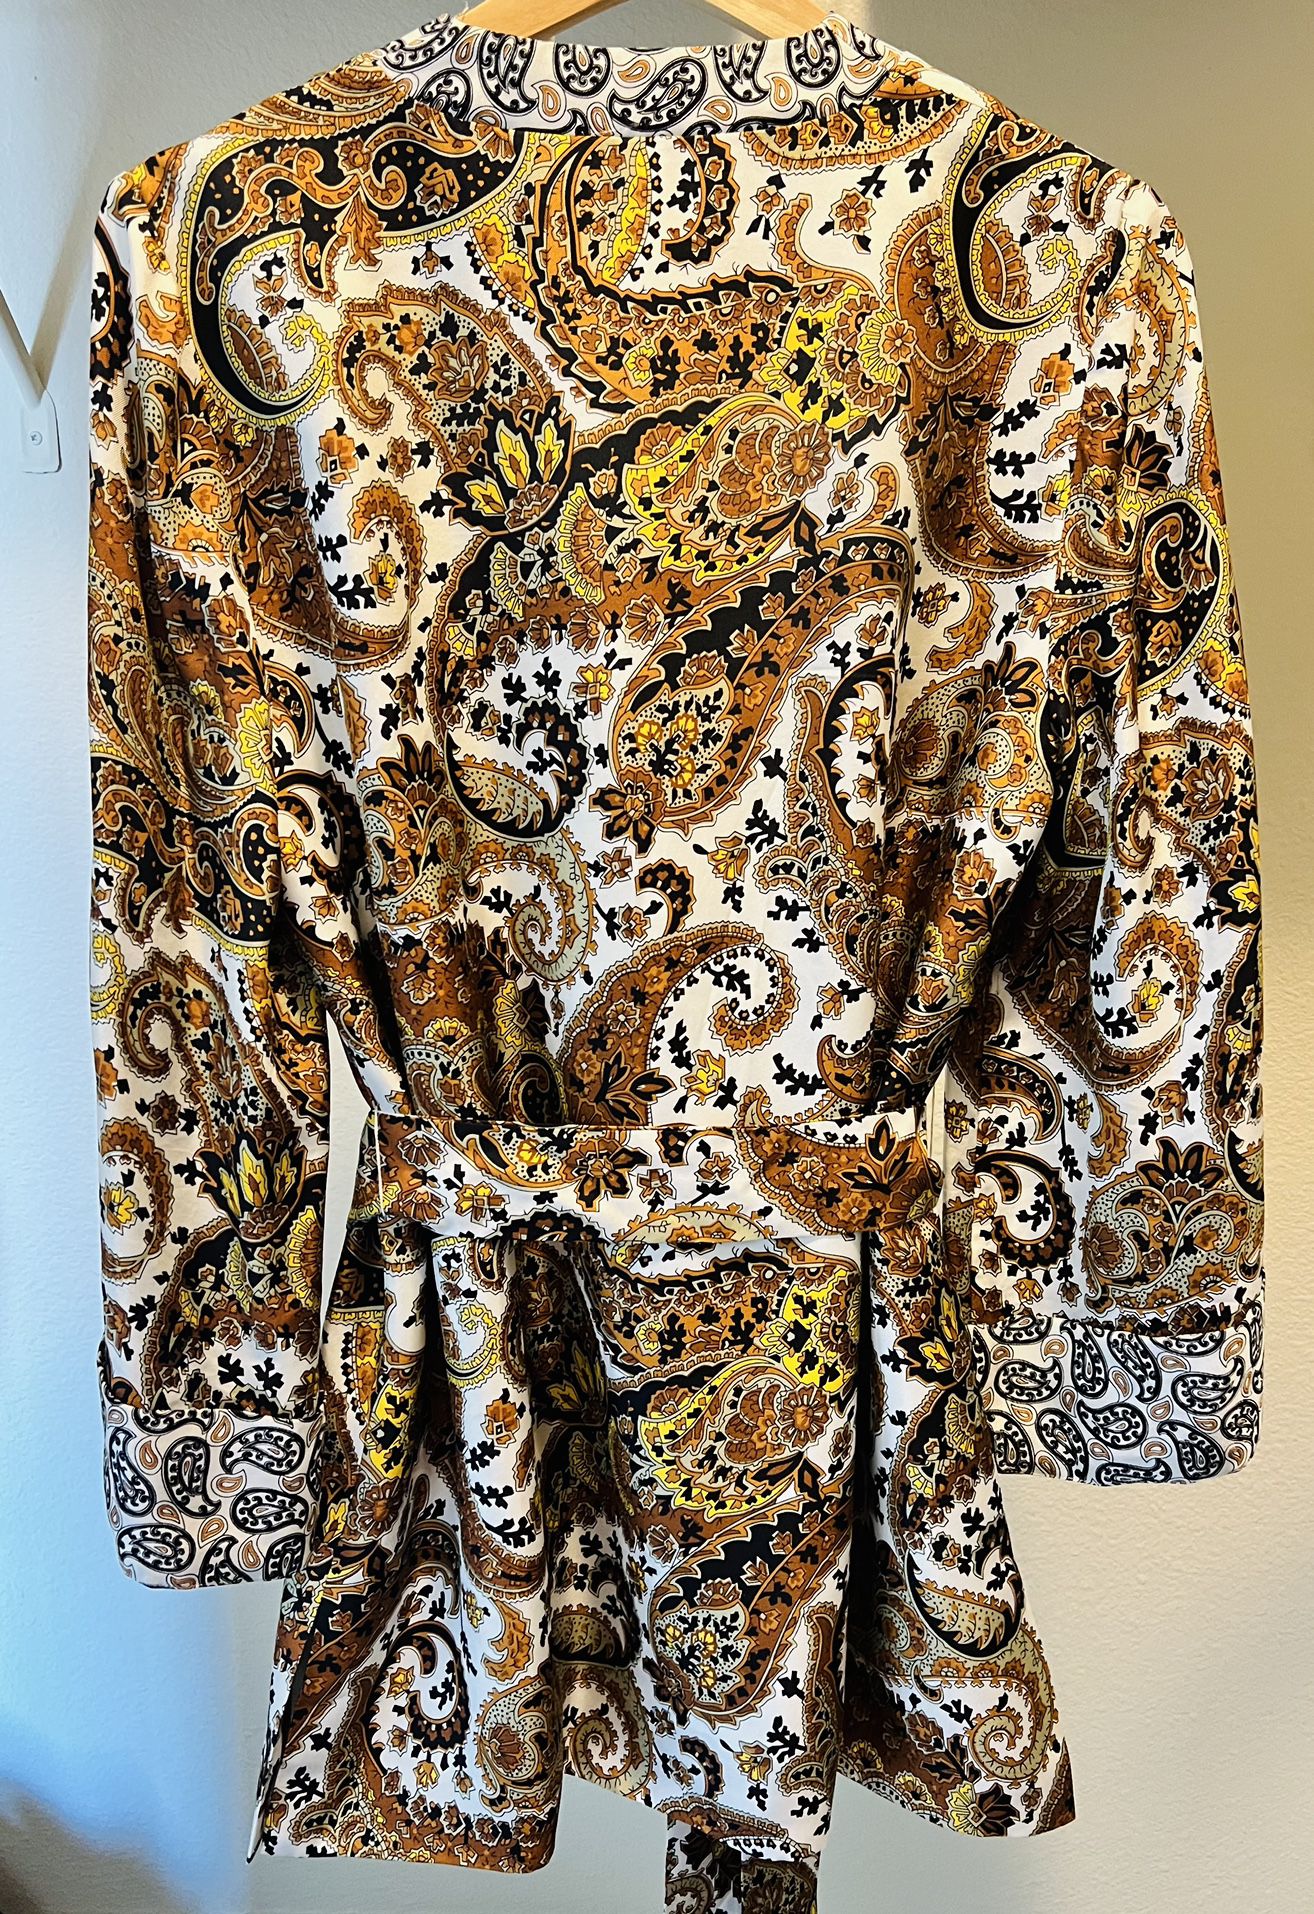 Kimono Robe Dress